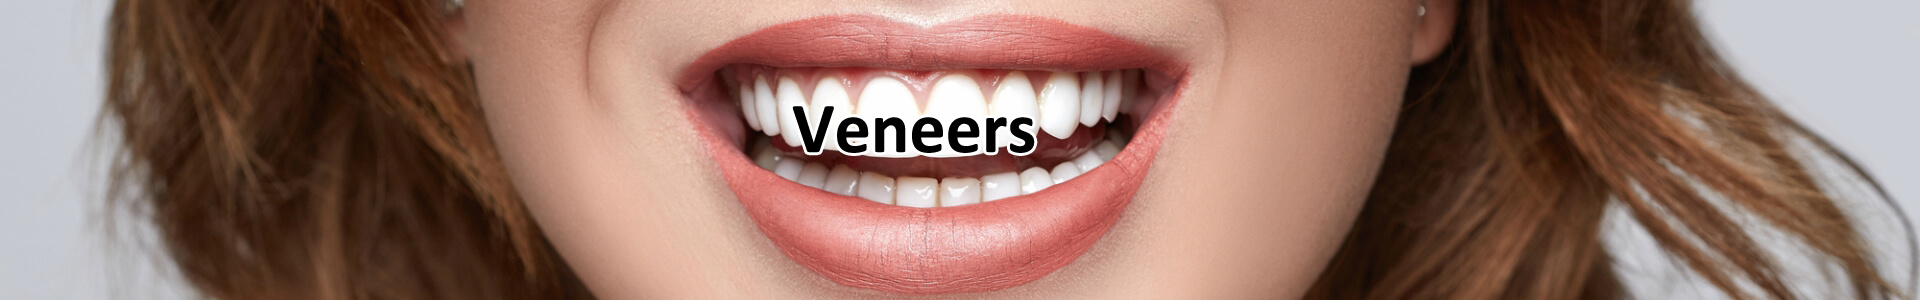 Best Veneers Services Visalia 